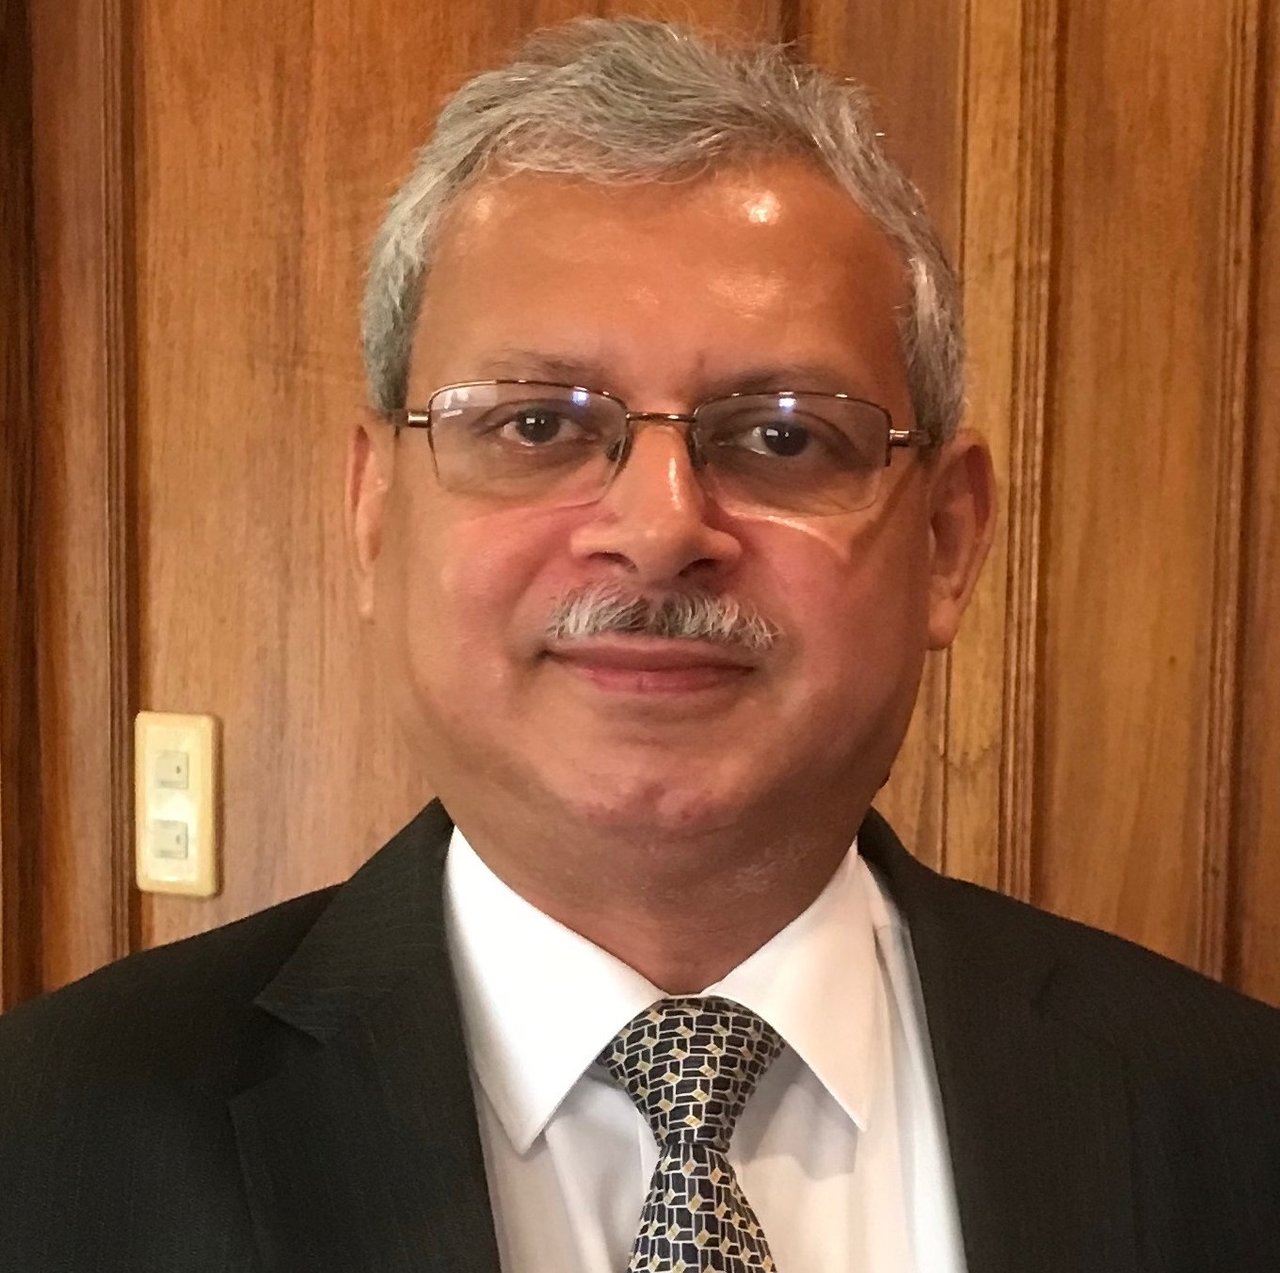 Mr Mazumdr headshot in a dark suit and tie, in front of a wooden background